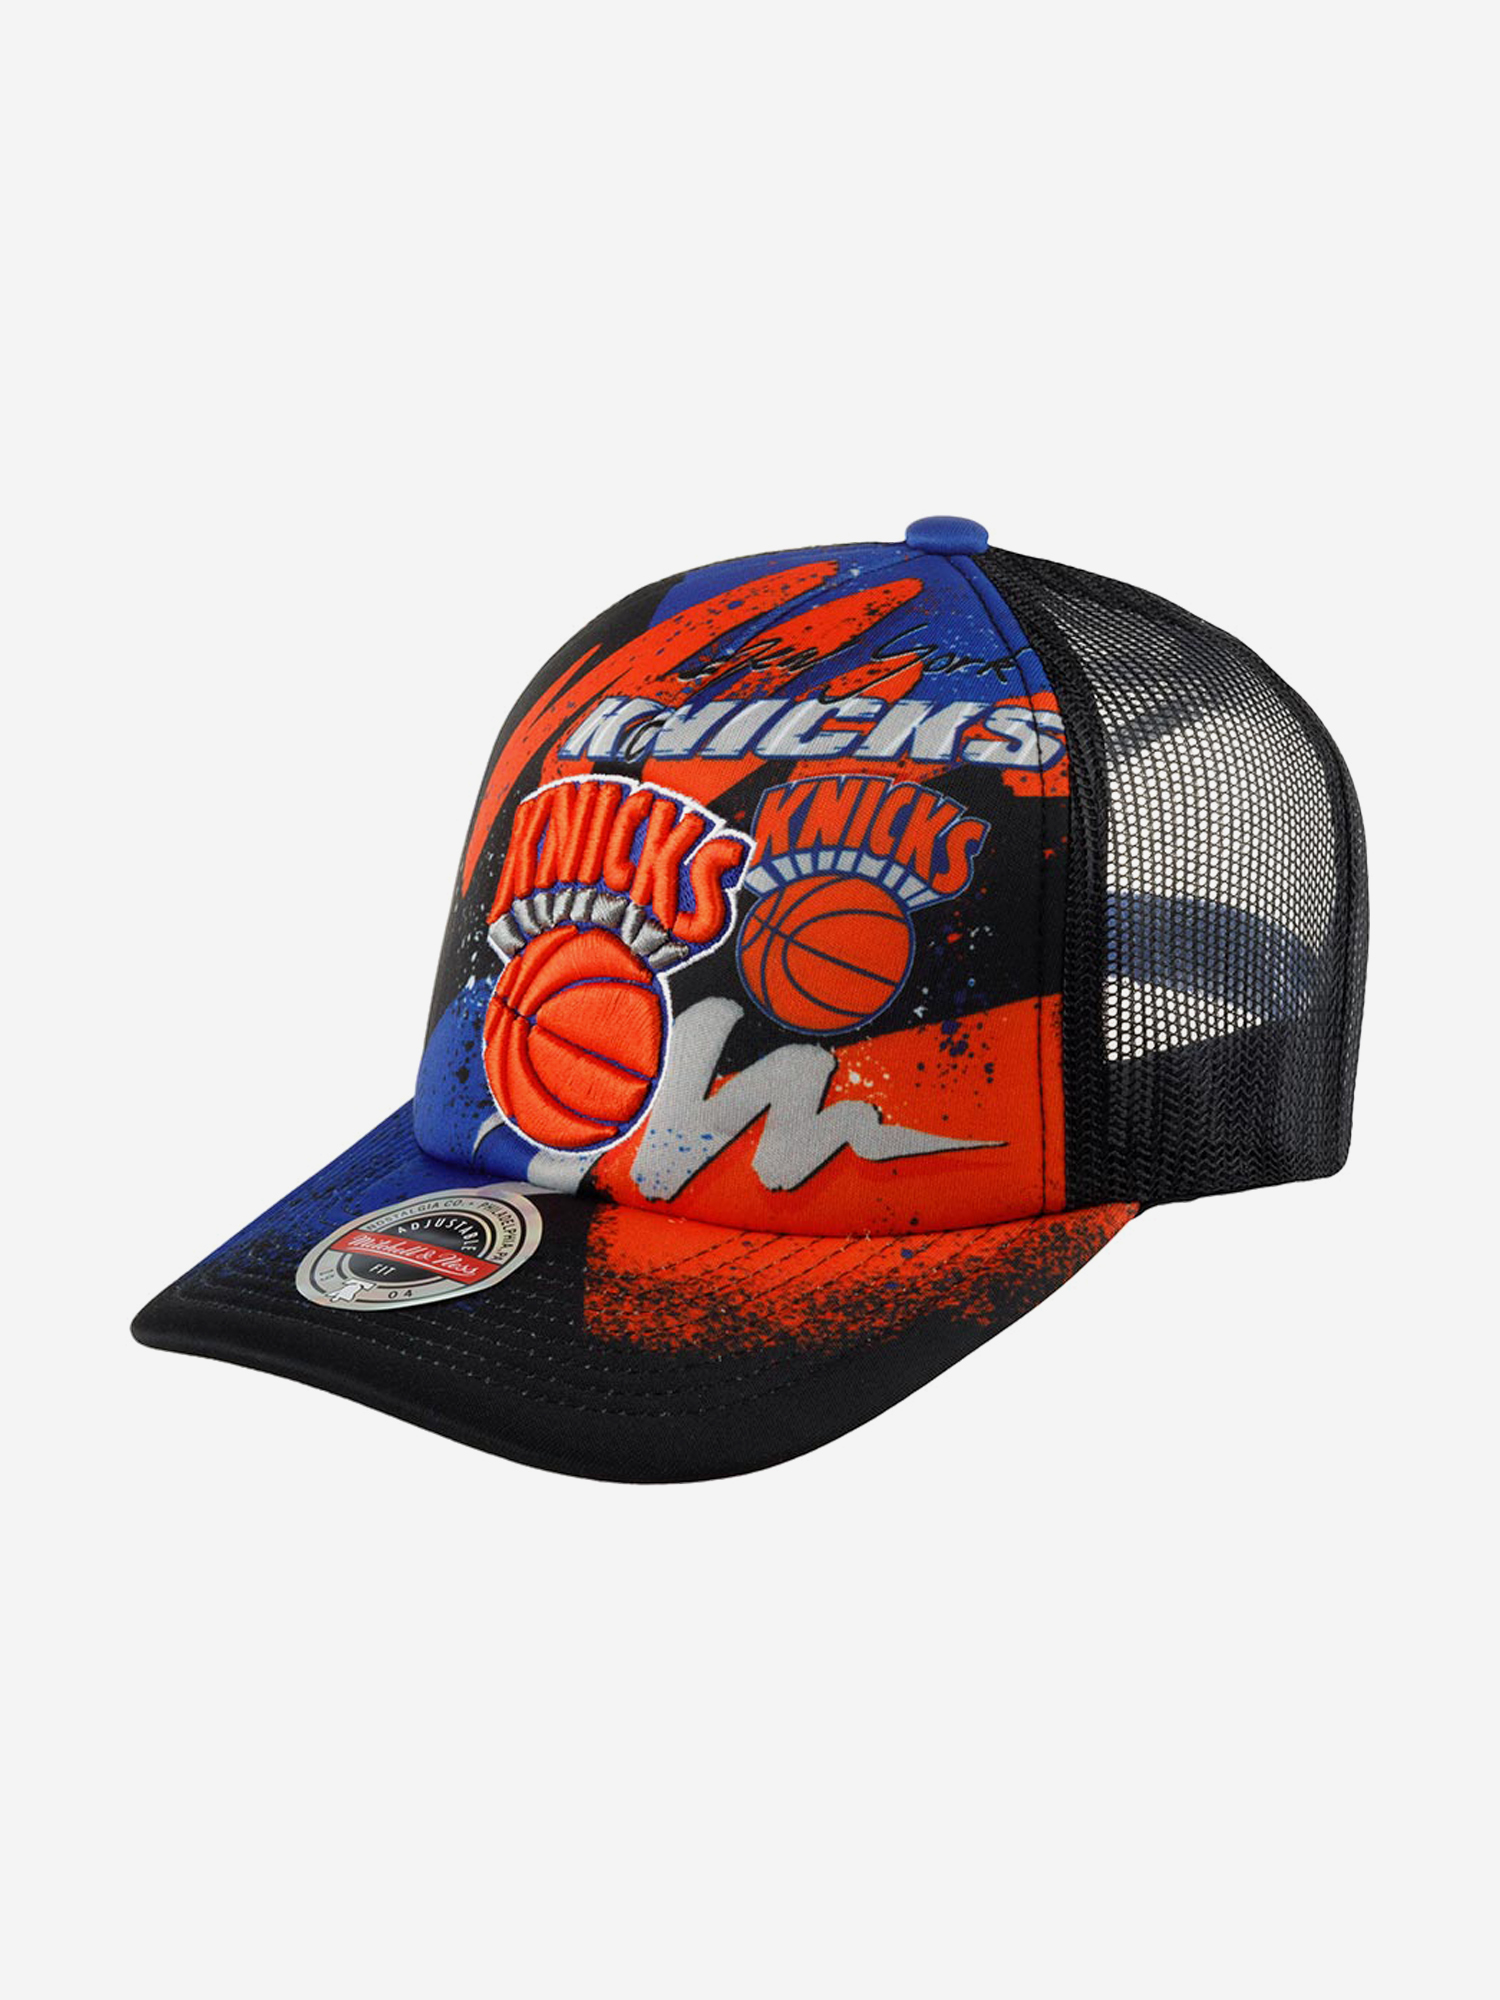 Бейсболка с сеточкой MITCHELL NESS HHSS2993-NYKYYPPPBLCK New York Knicks NBA (черный), Черный